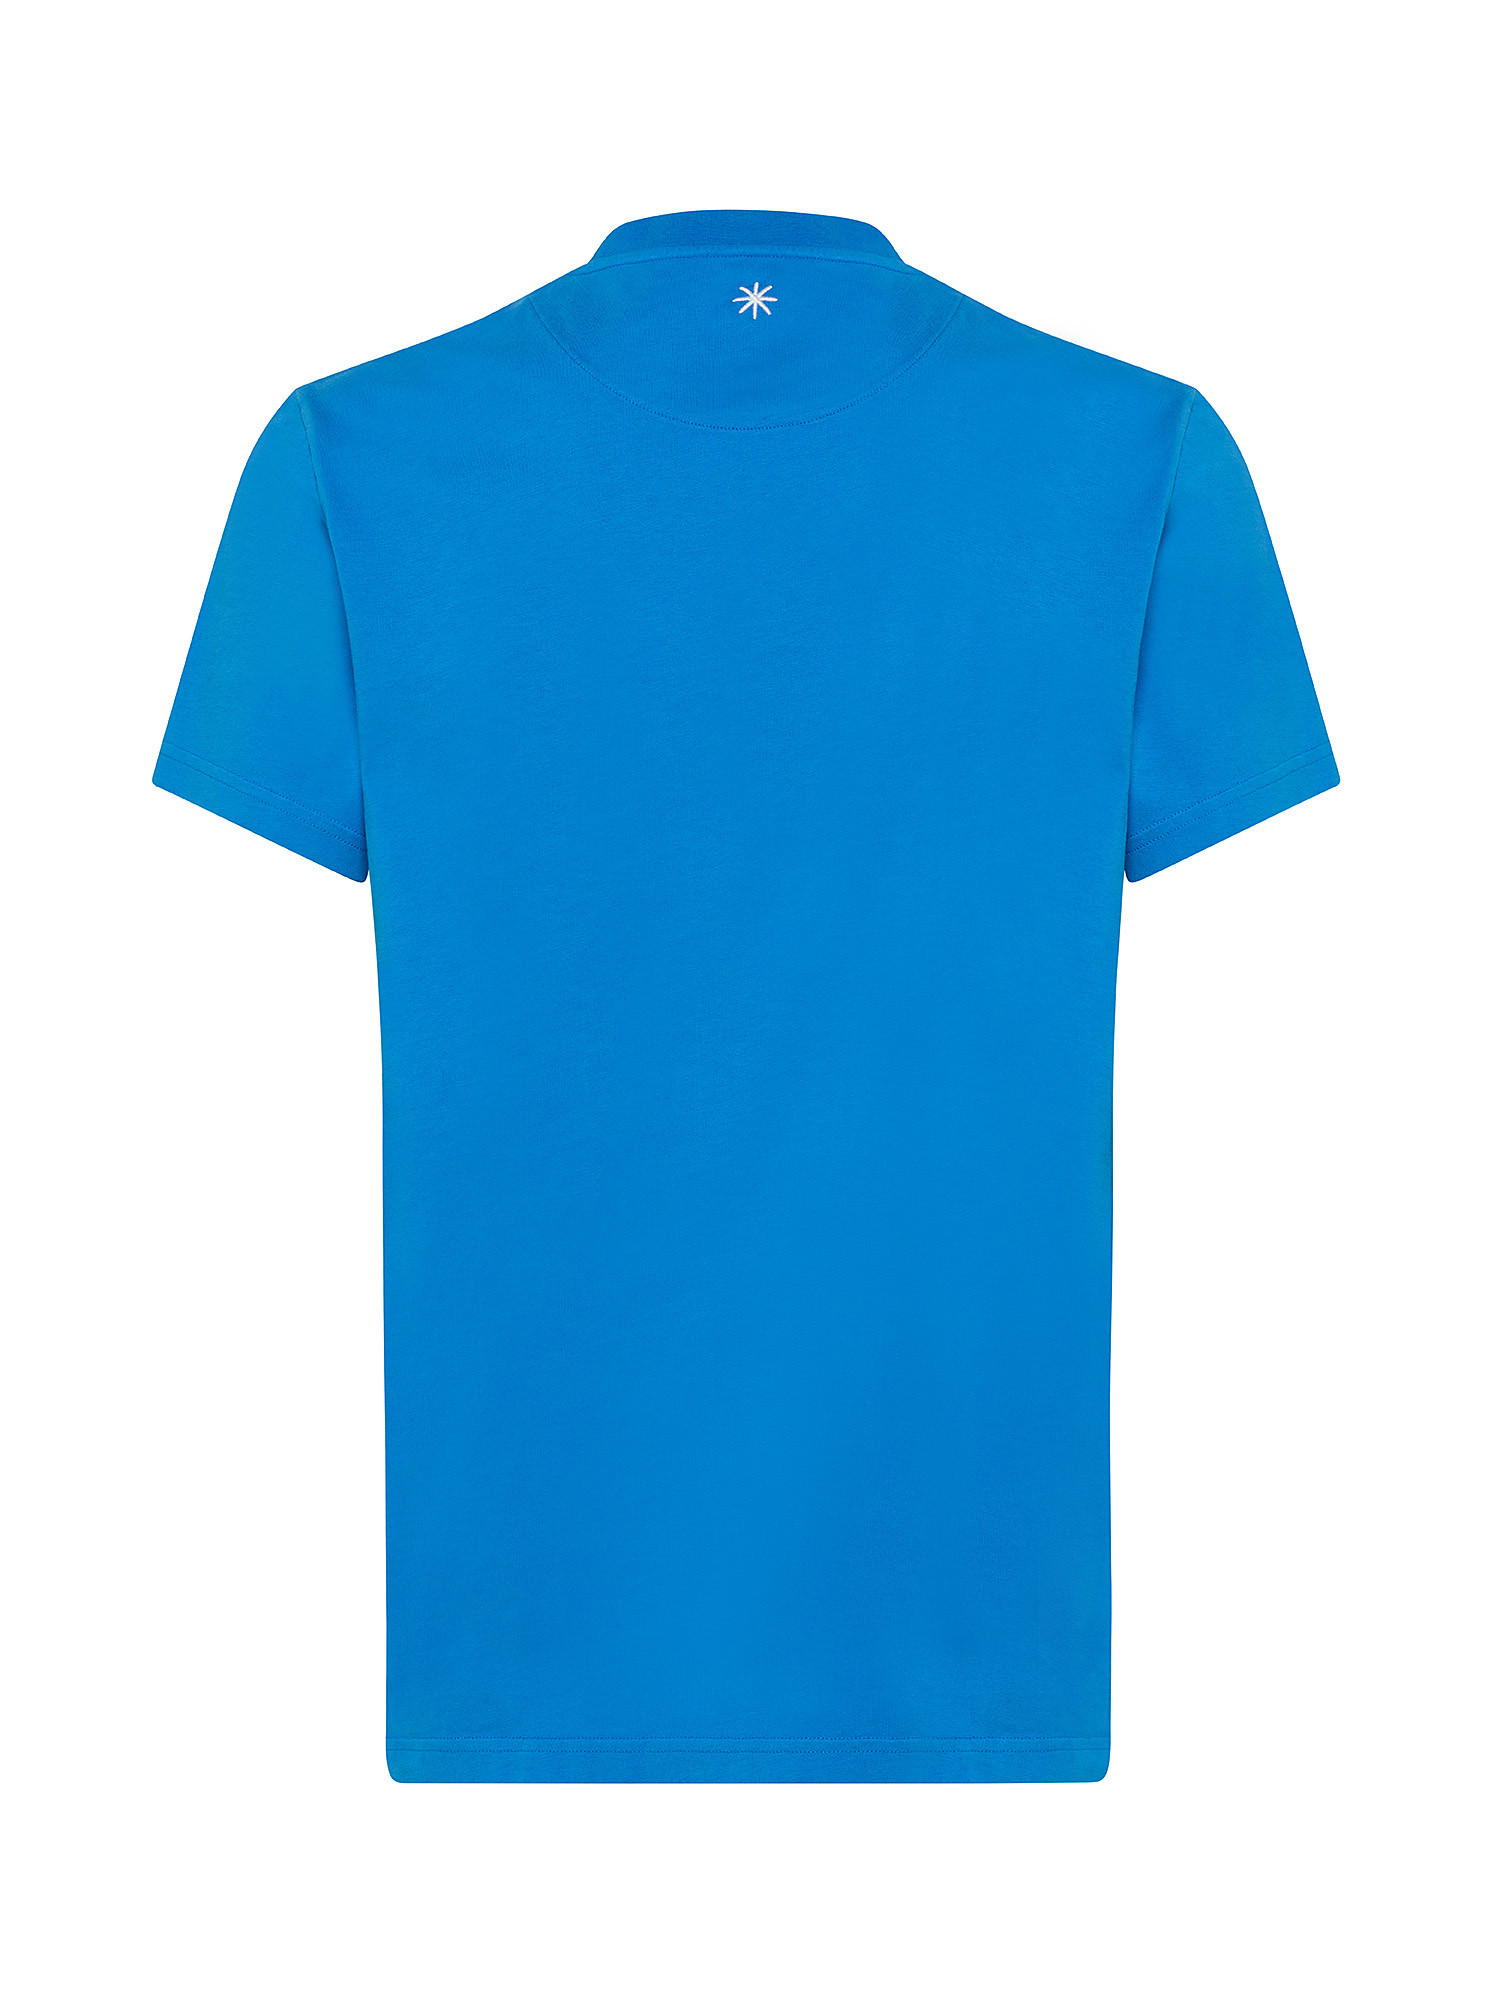 Manuel Ritz - Cotton T-shirt, Blue, large image number 1